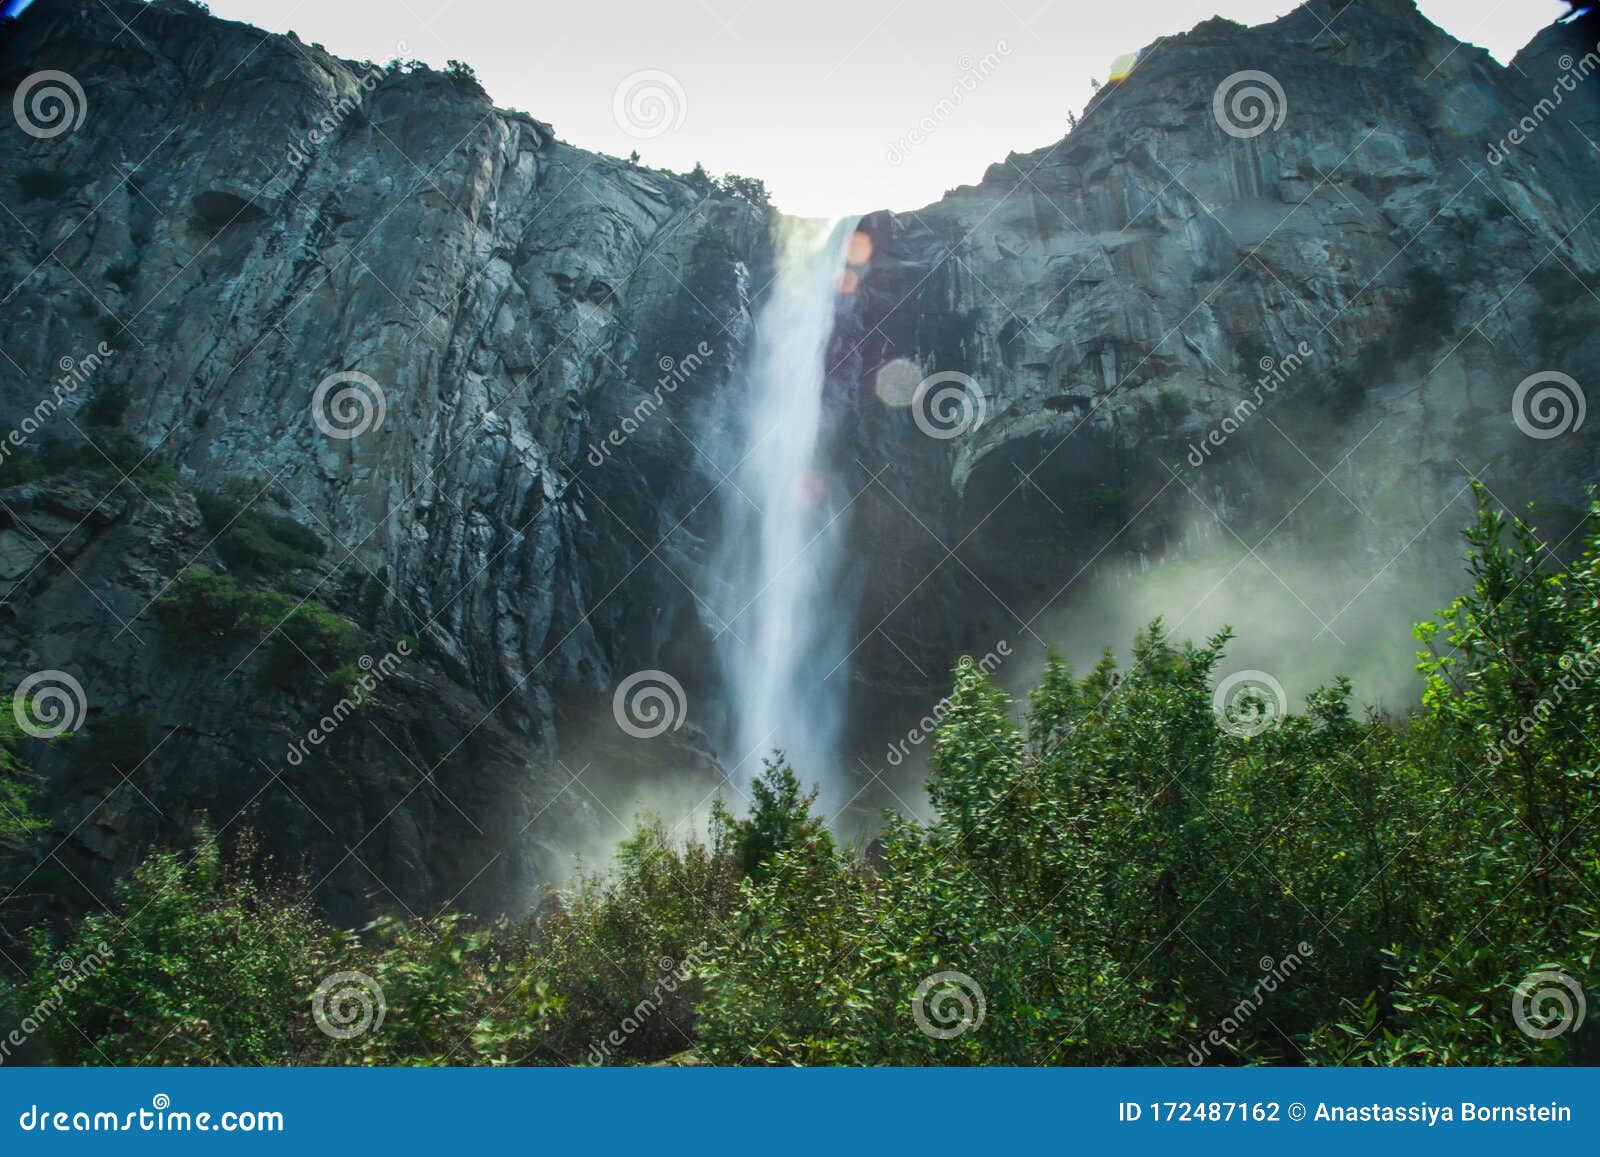 beautiful bridalveil falls in yosemite valley in summer yosemite national park - california, usa